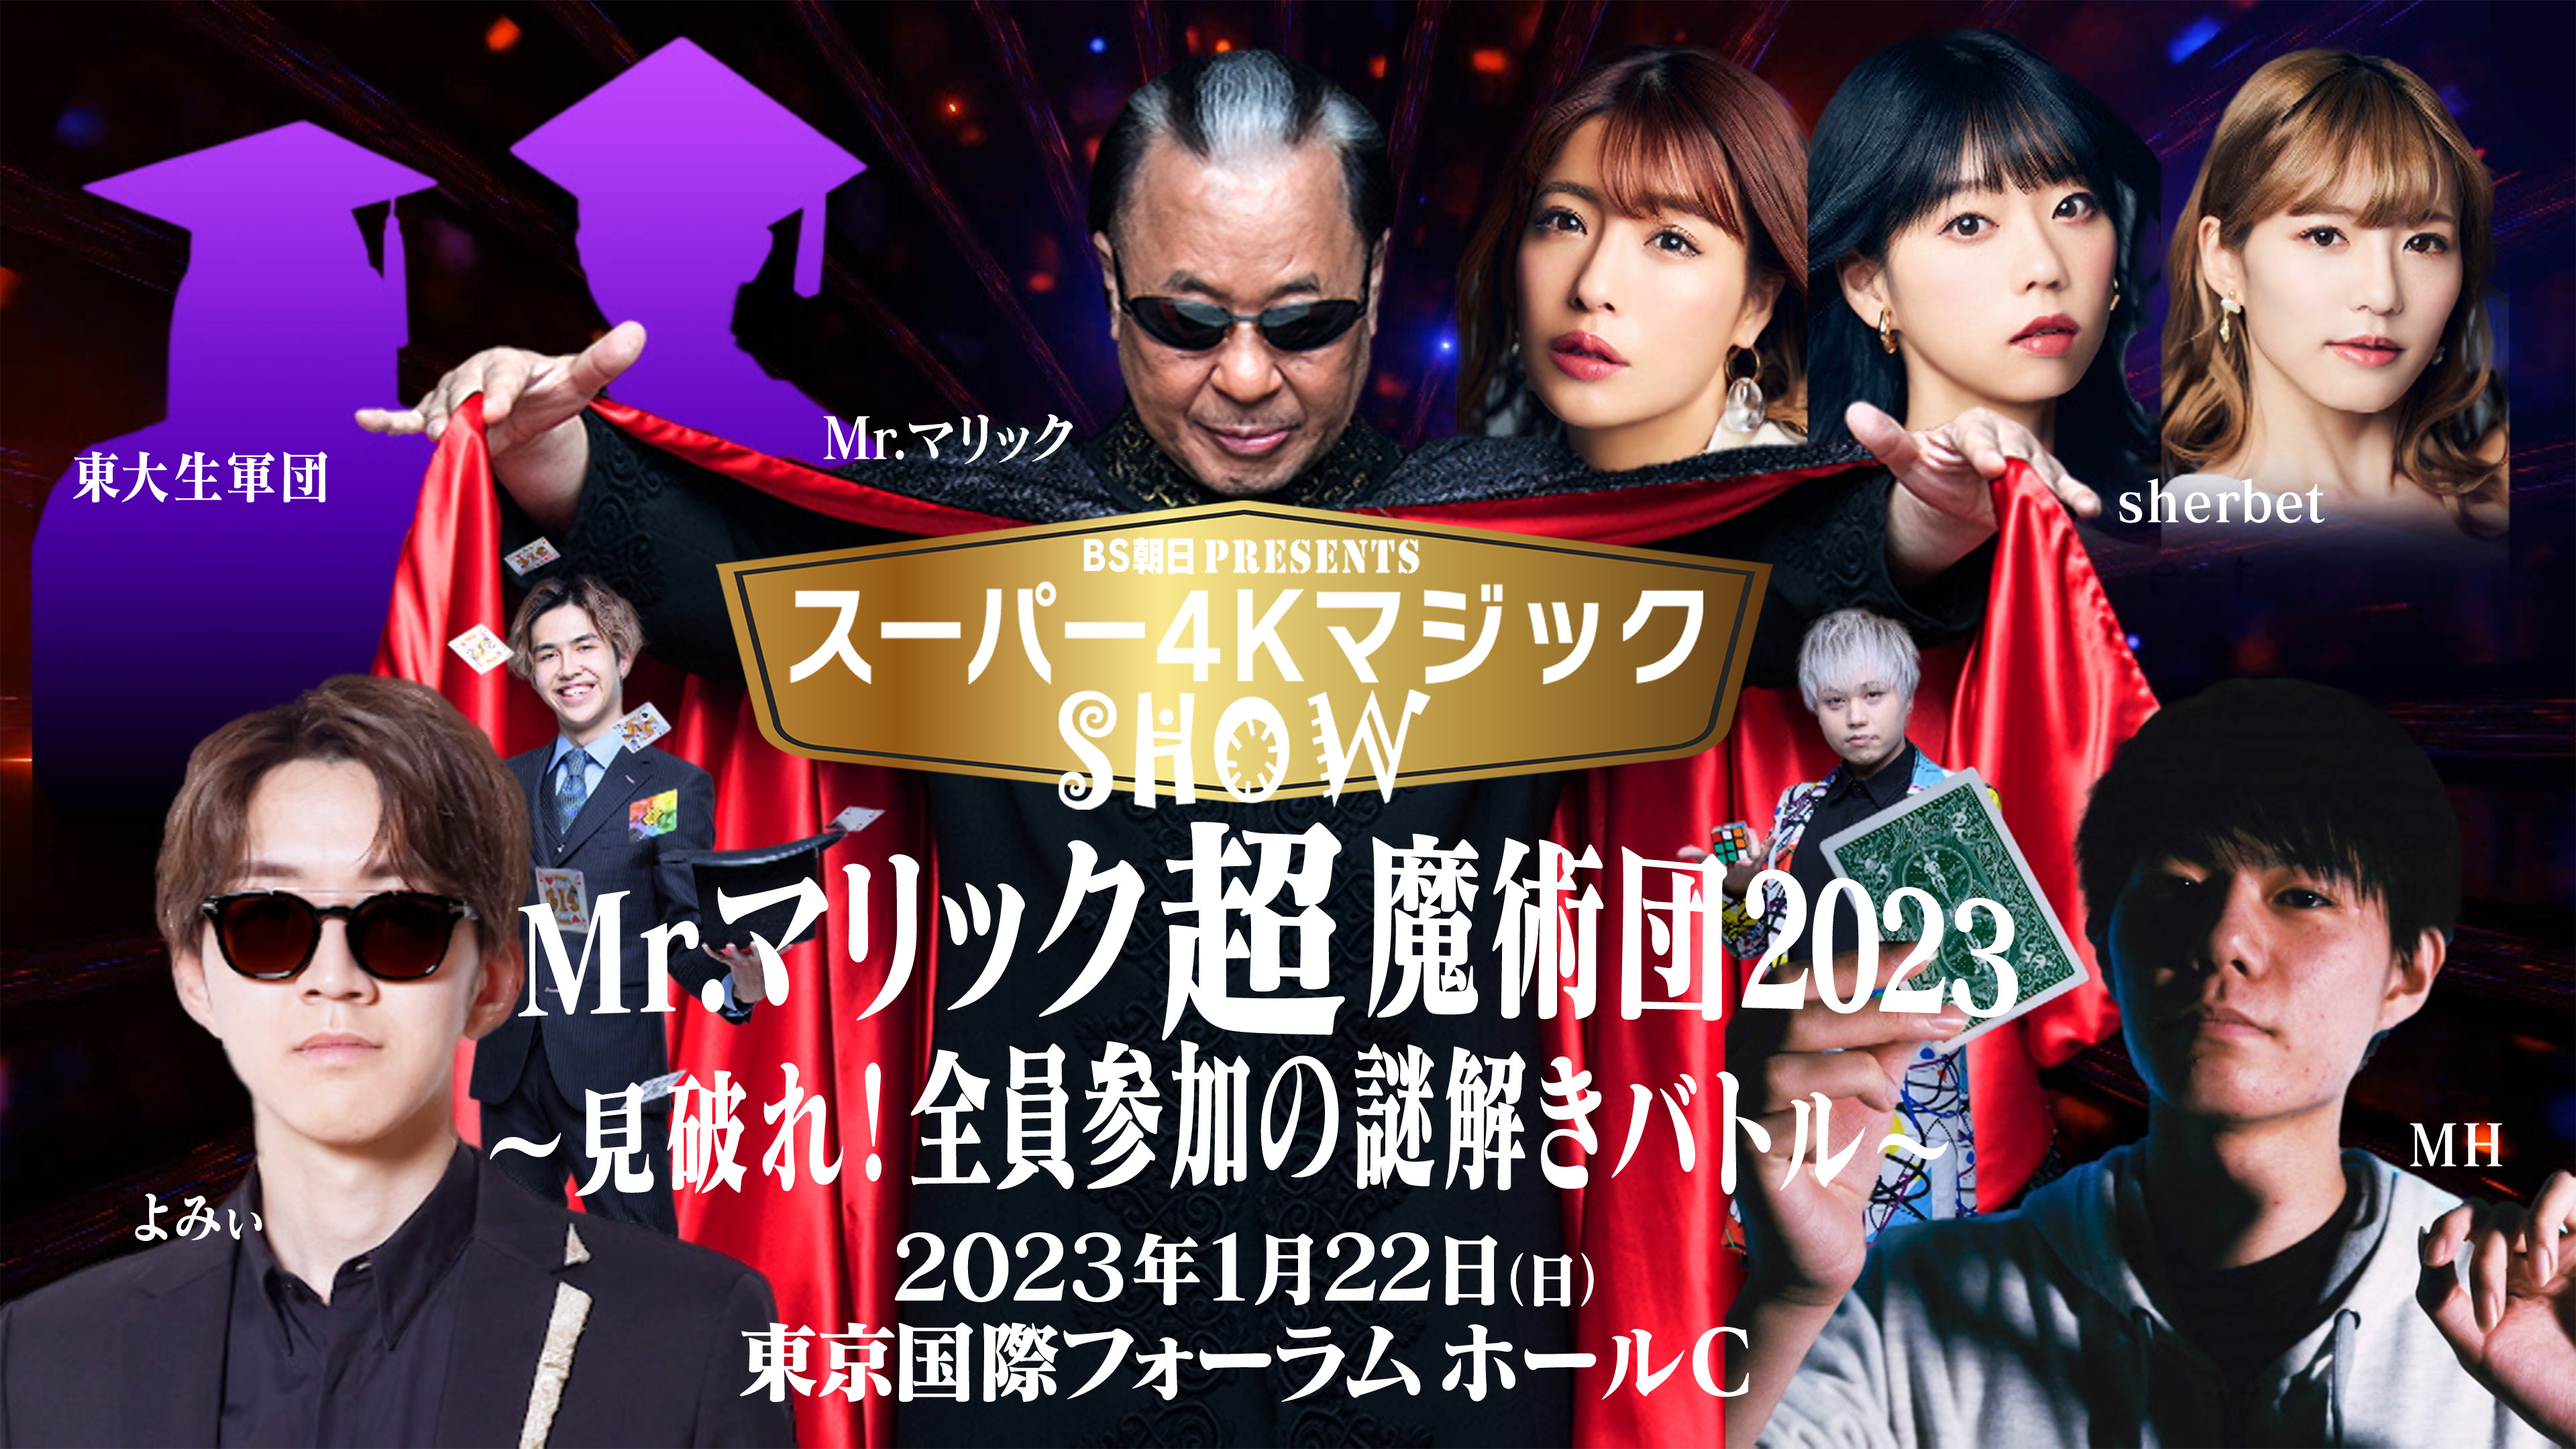 BS朝日presents スーパー4K マジックショーMr.マリック超魔術団 2023